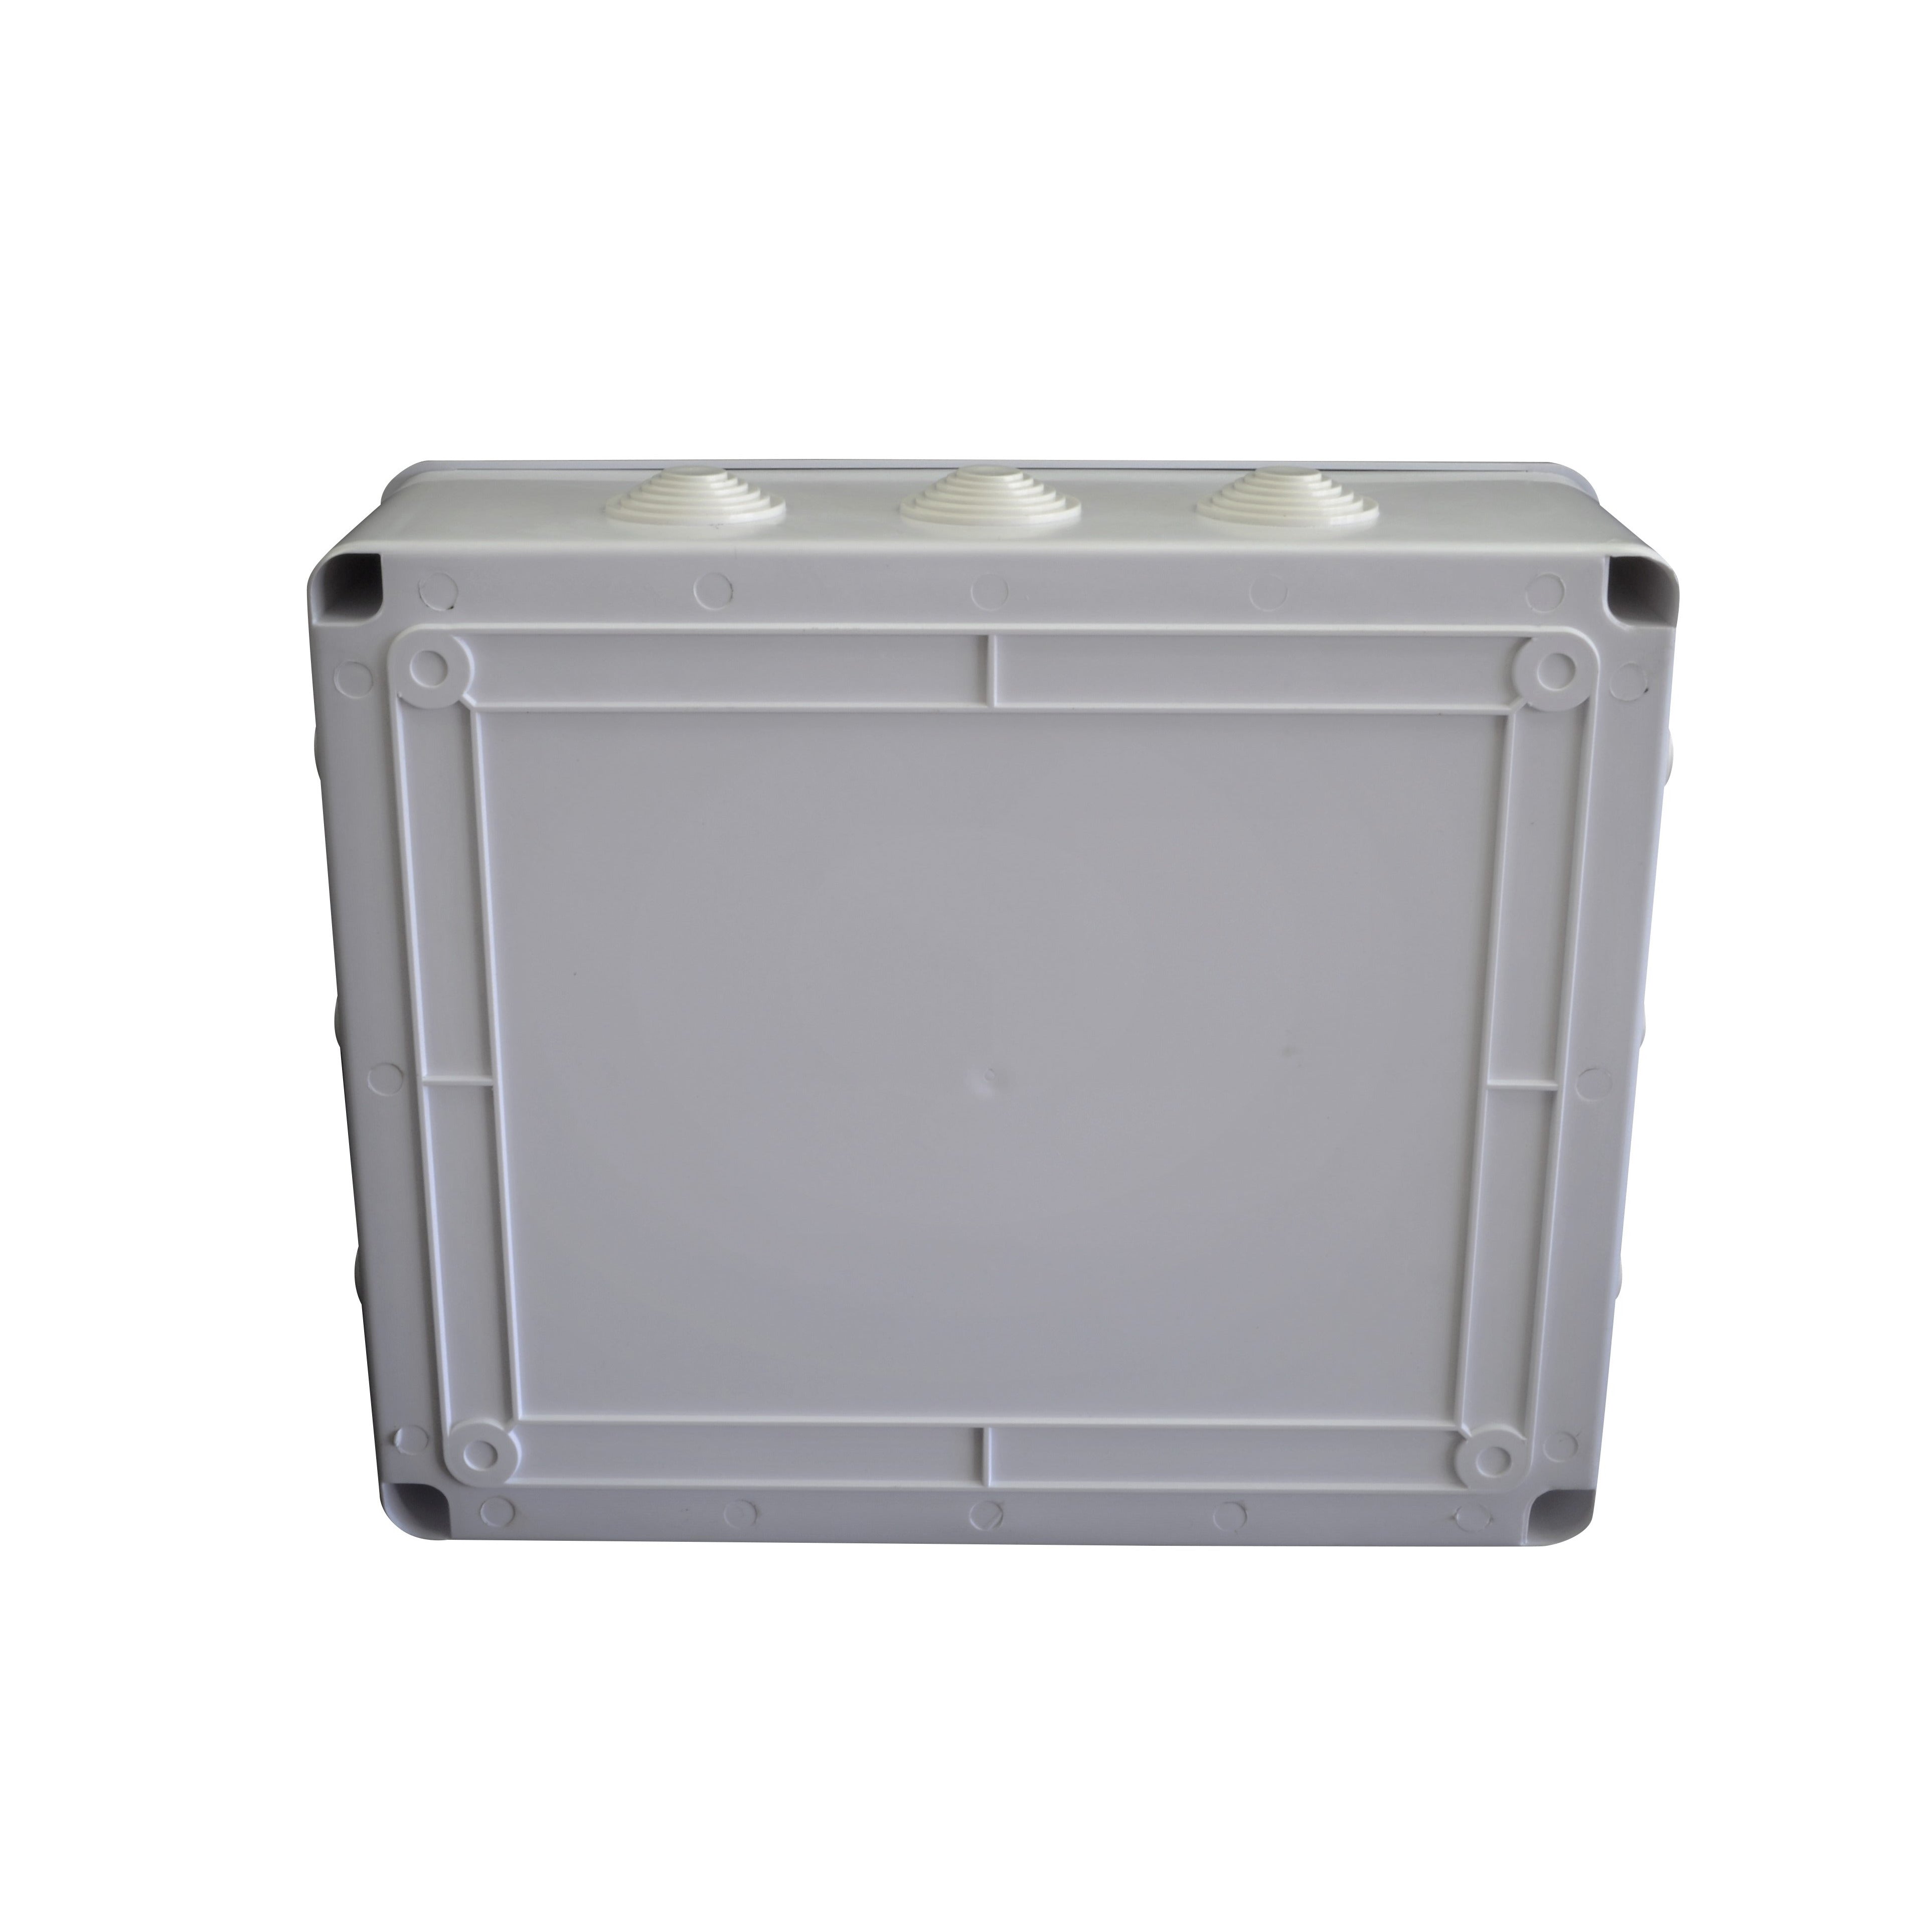 300x250x120 mm ABS Plastic IP65 Waterproof Junction Box